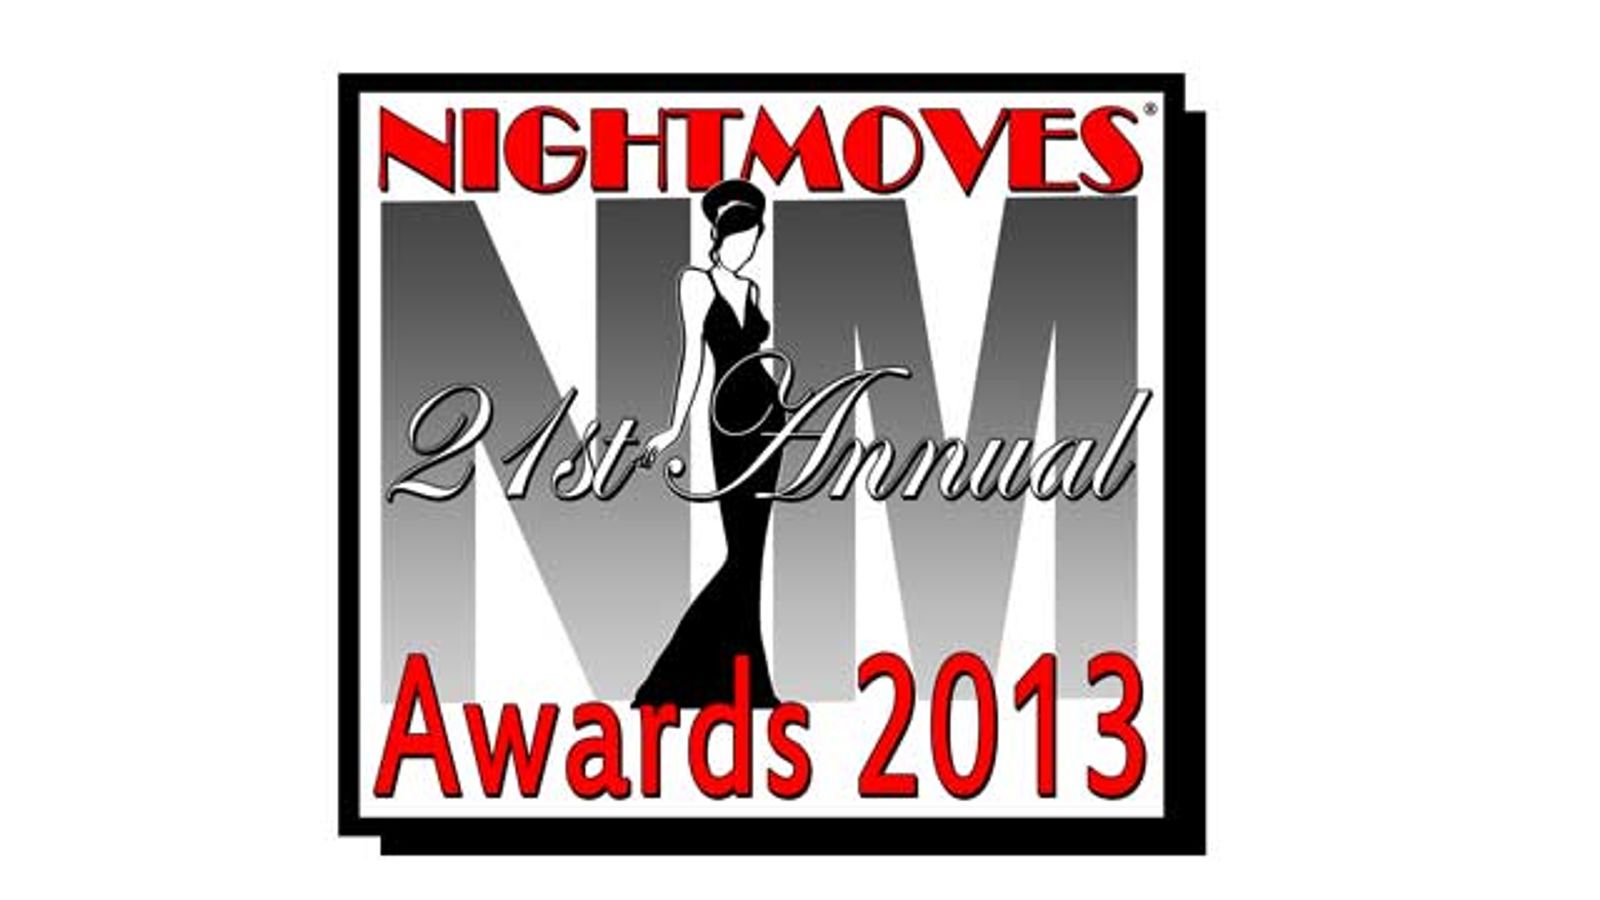 21st Annual NightMoves Awards Winners Announced